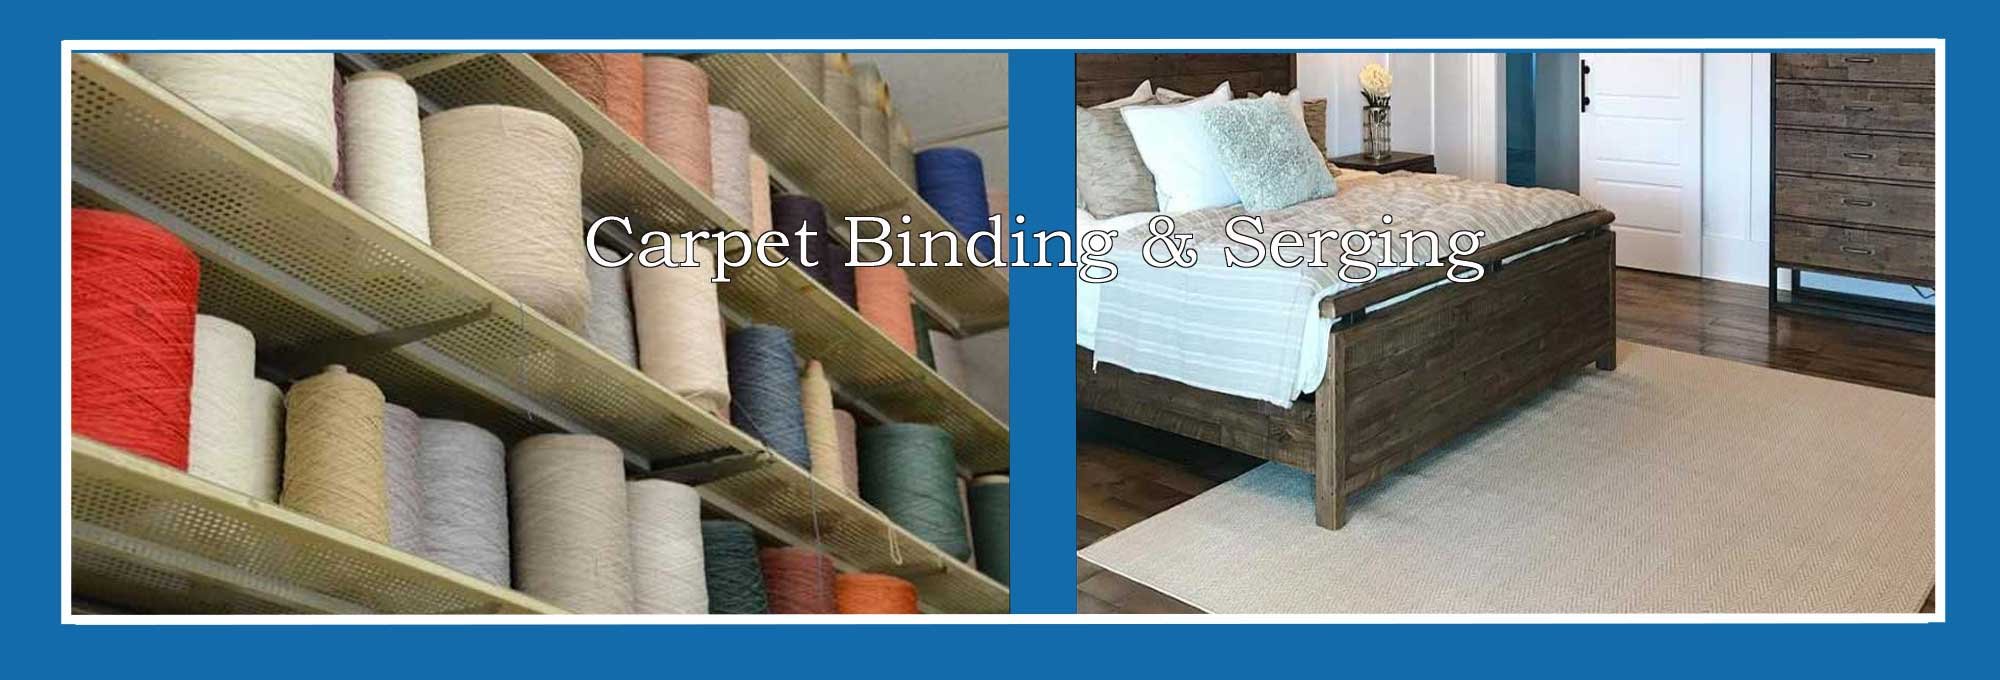 Carpet Binding and Serging in Peoria